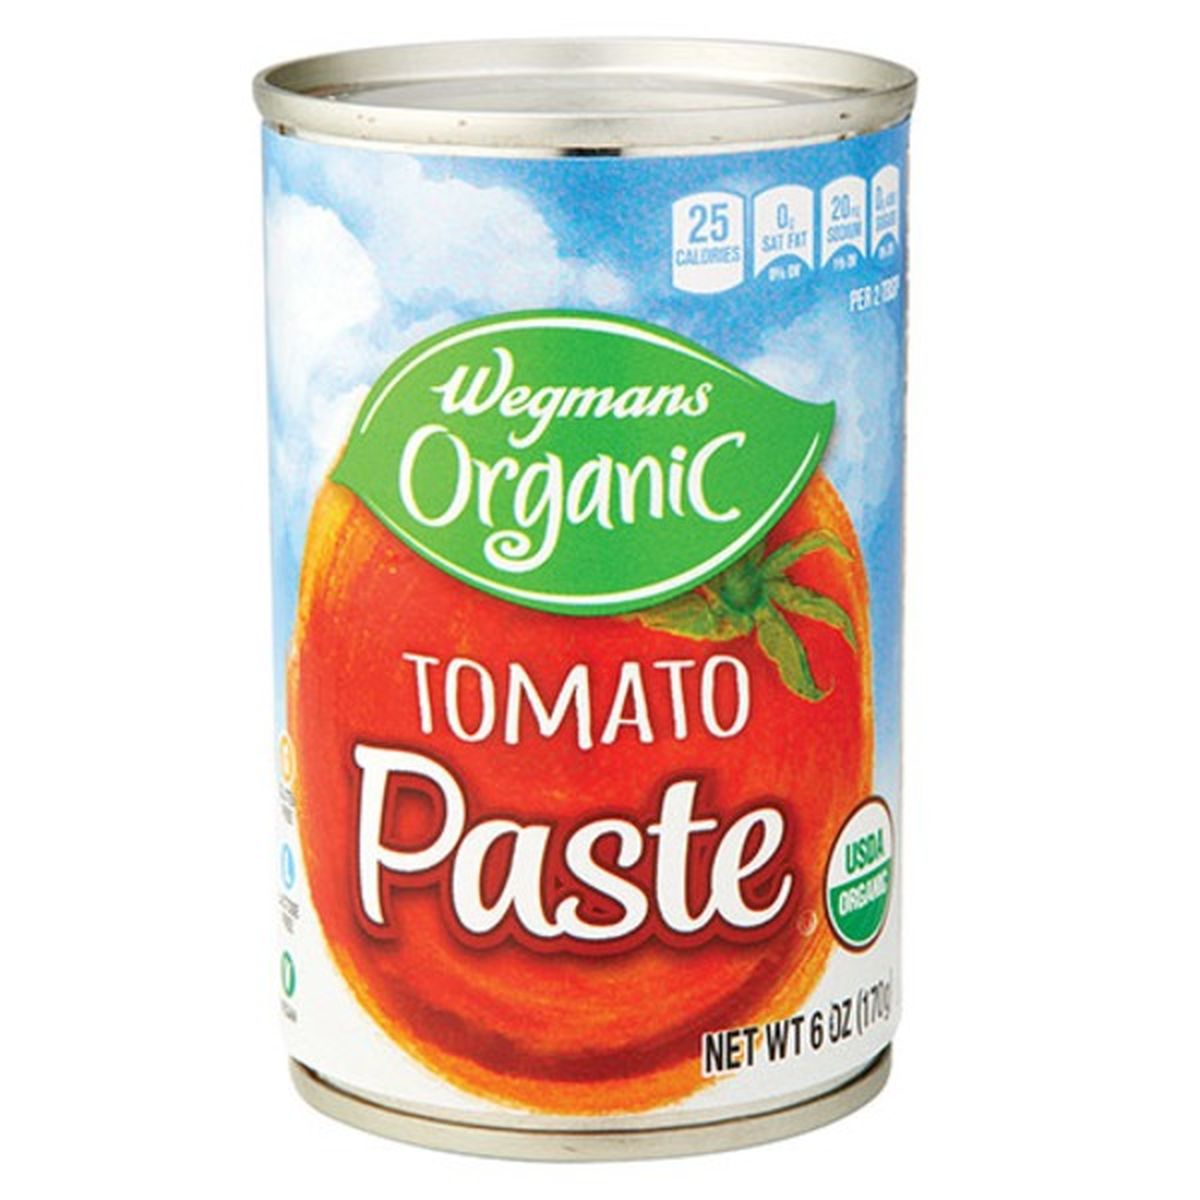 Calories in Wegmans Organic Tomato Paste